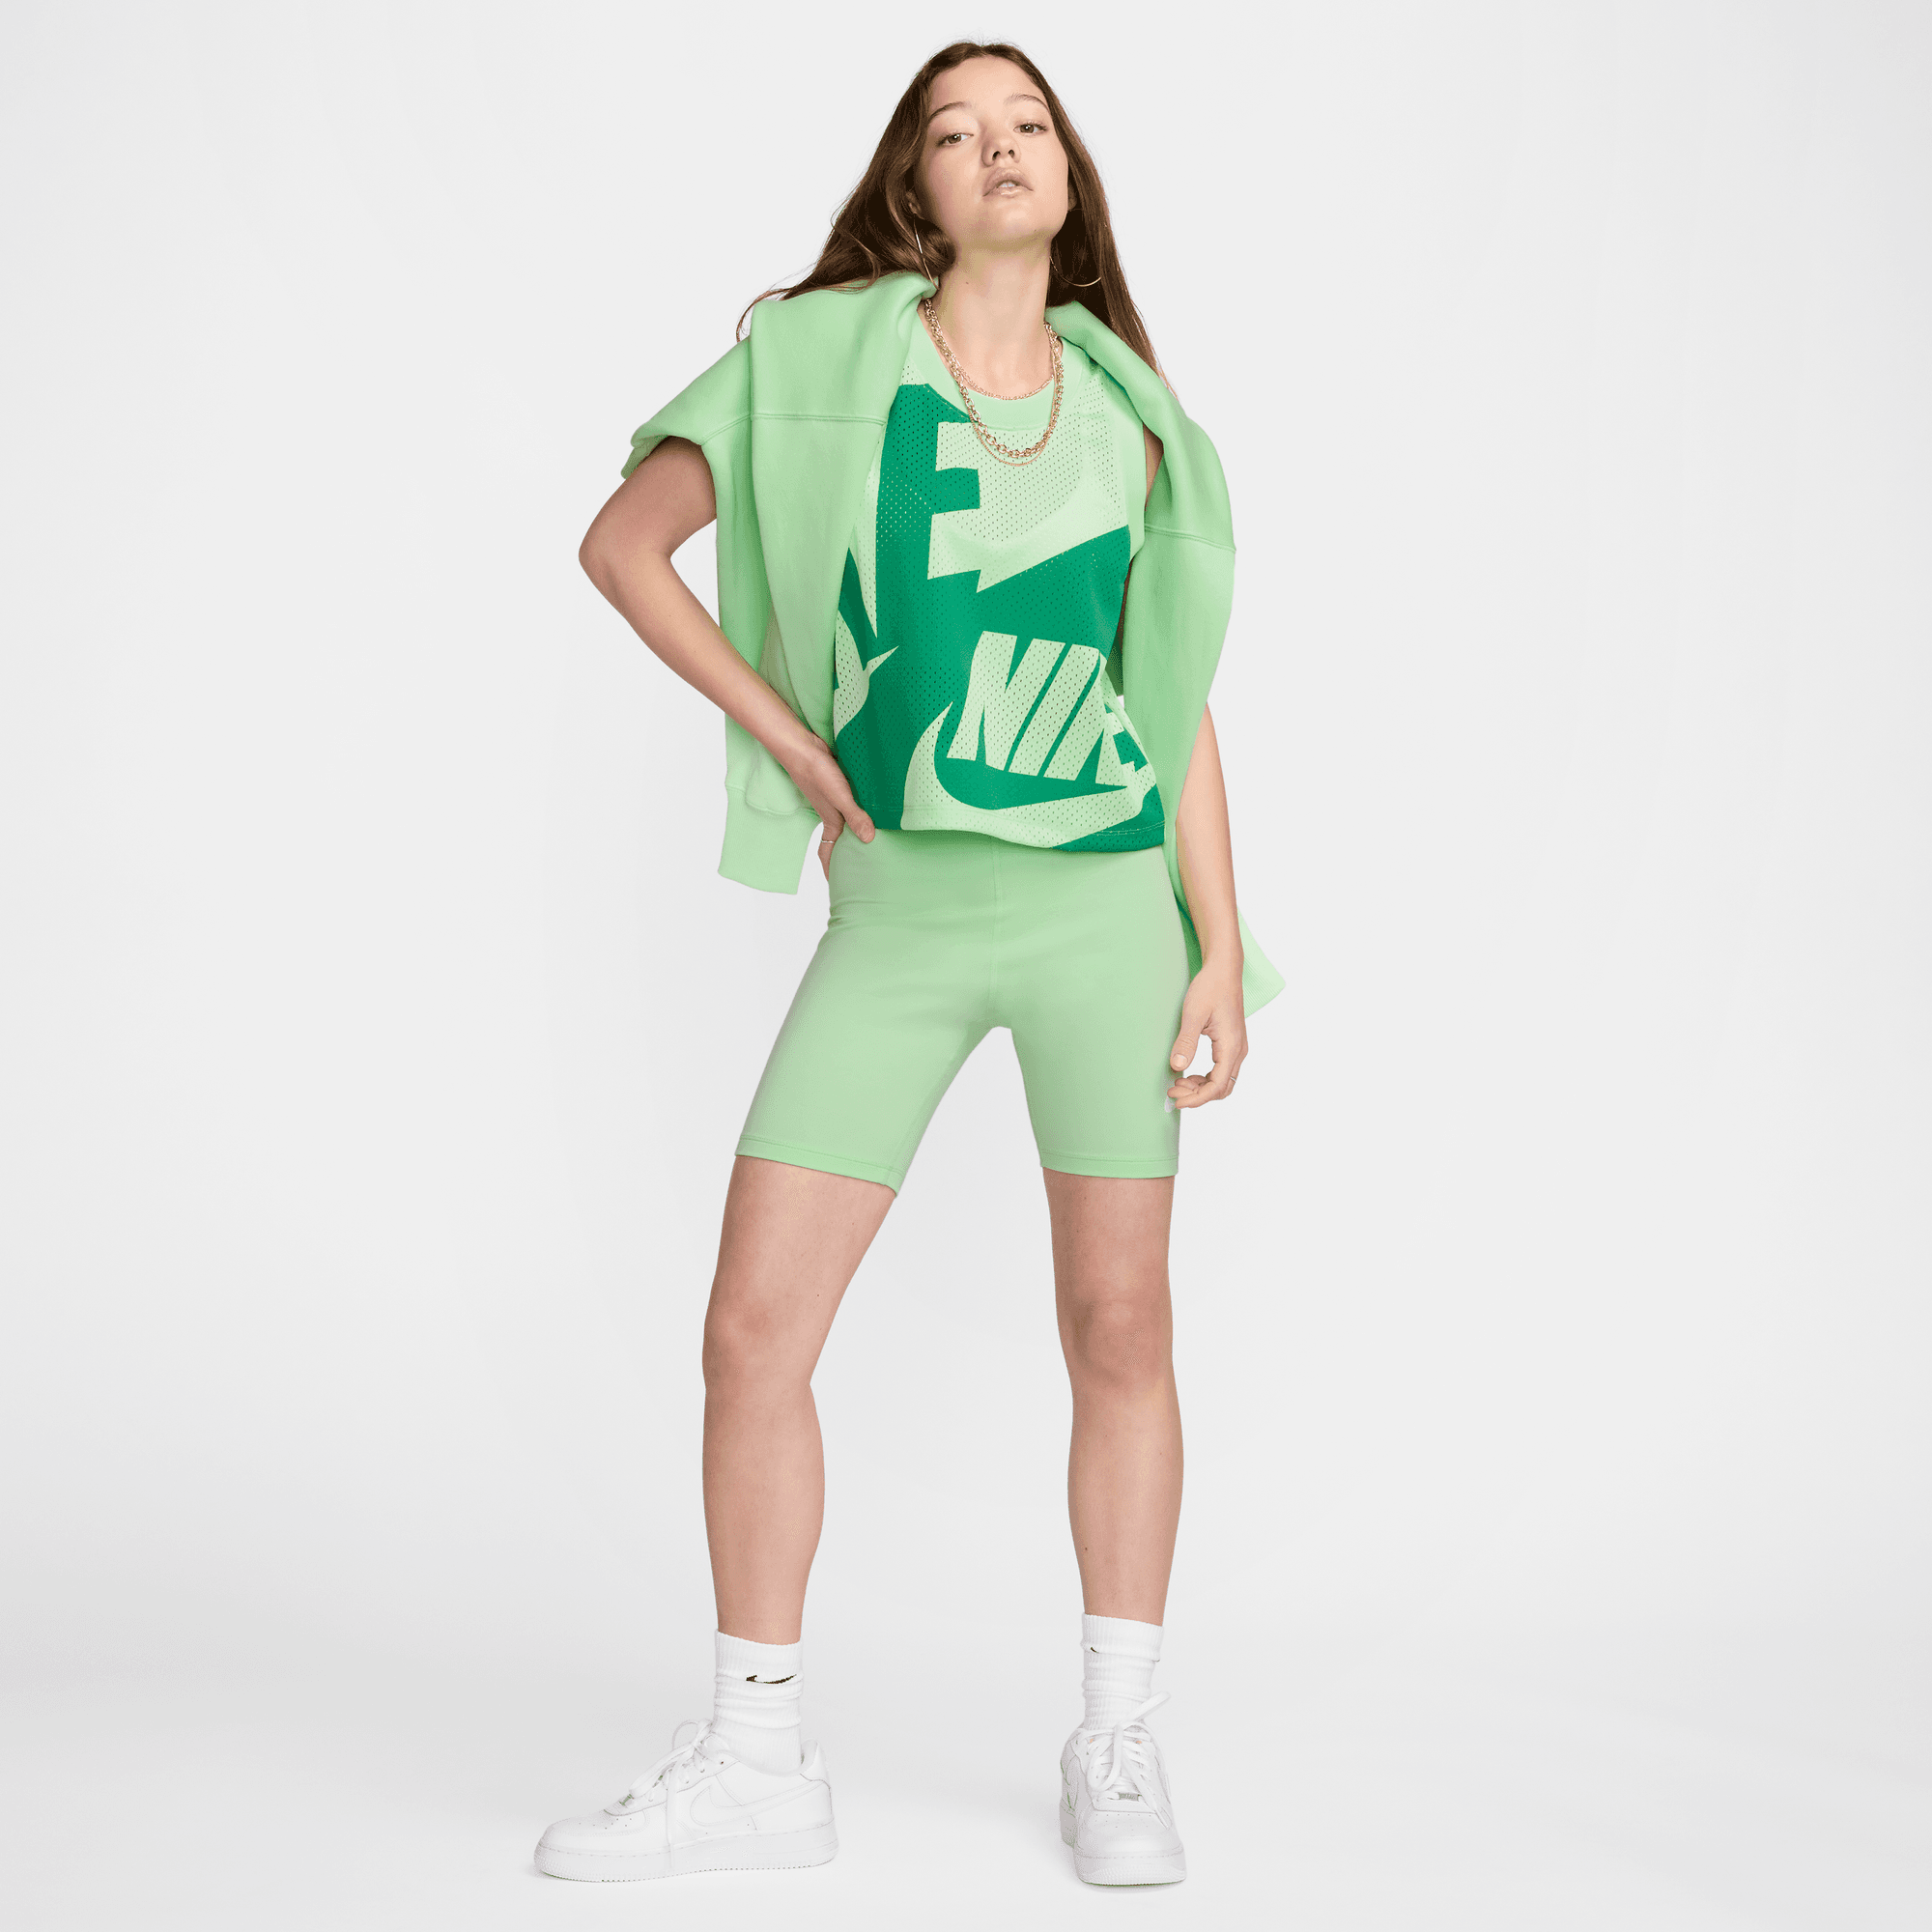 Nike Air Women's Vapor Green Mesh Tank Top